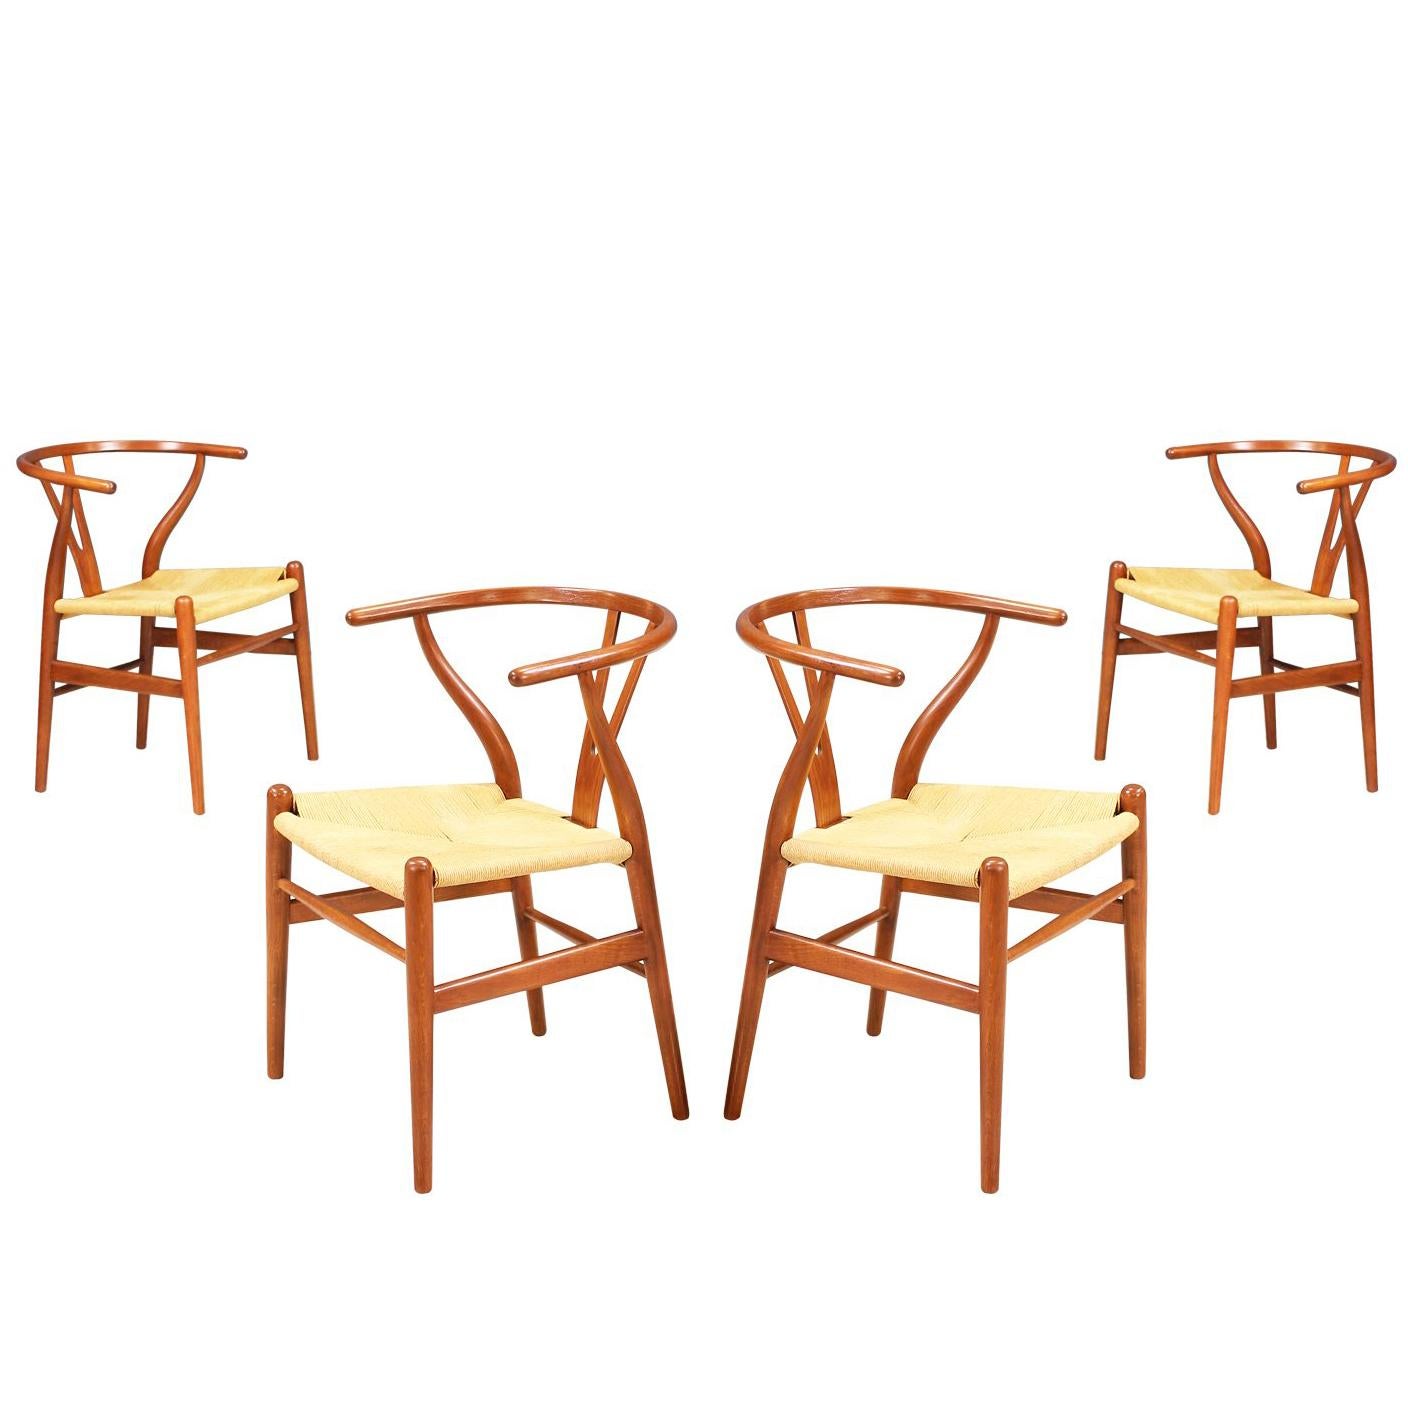 Hans J. Wegner “Wishbone” CH-24 Dining Chairs for Carl Hansen & Søn